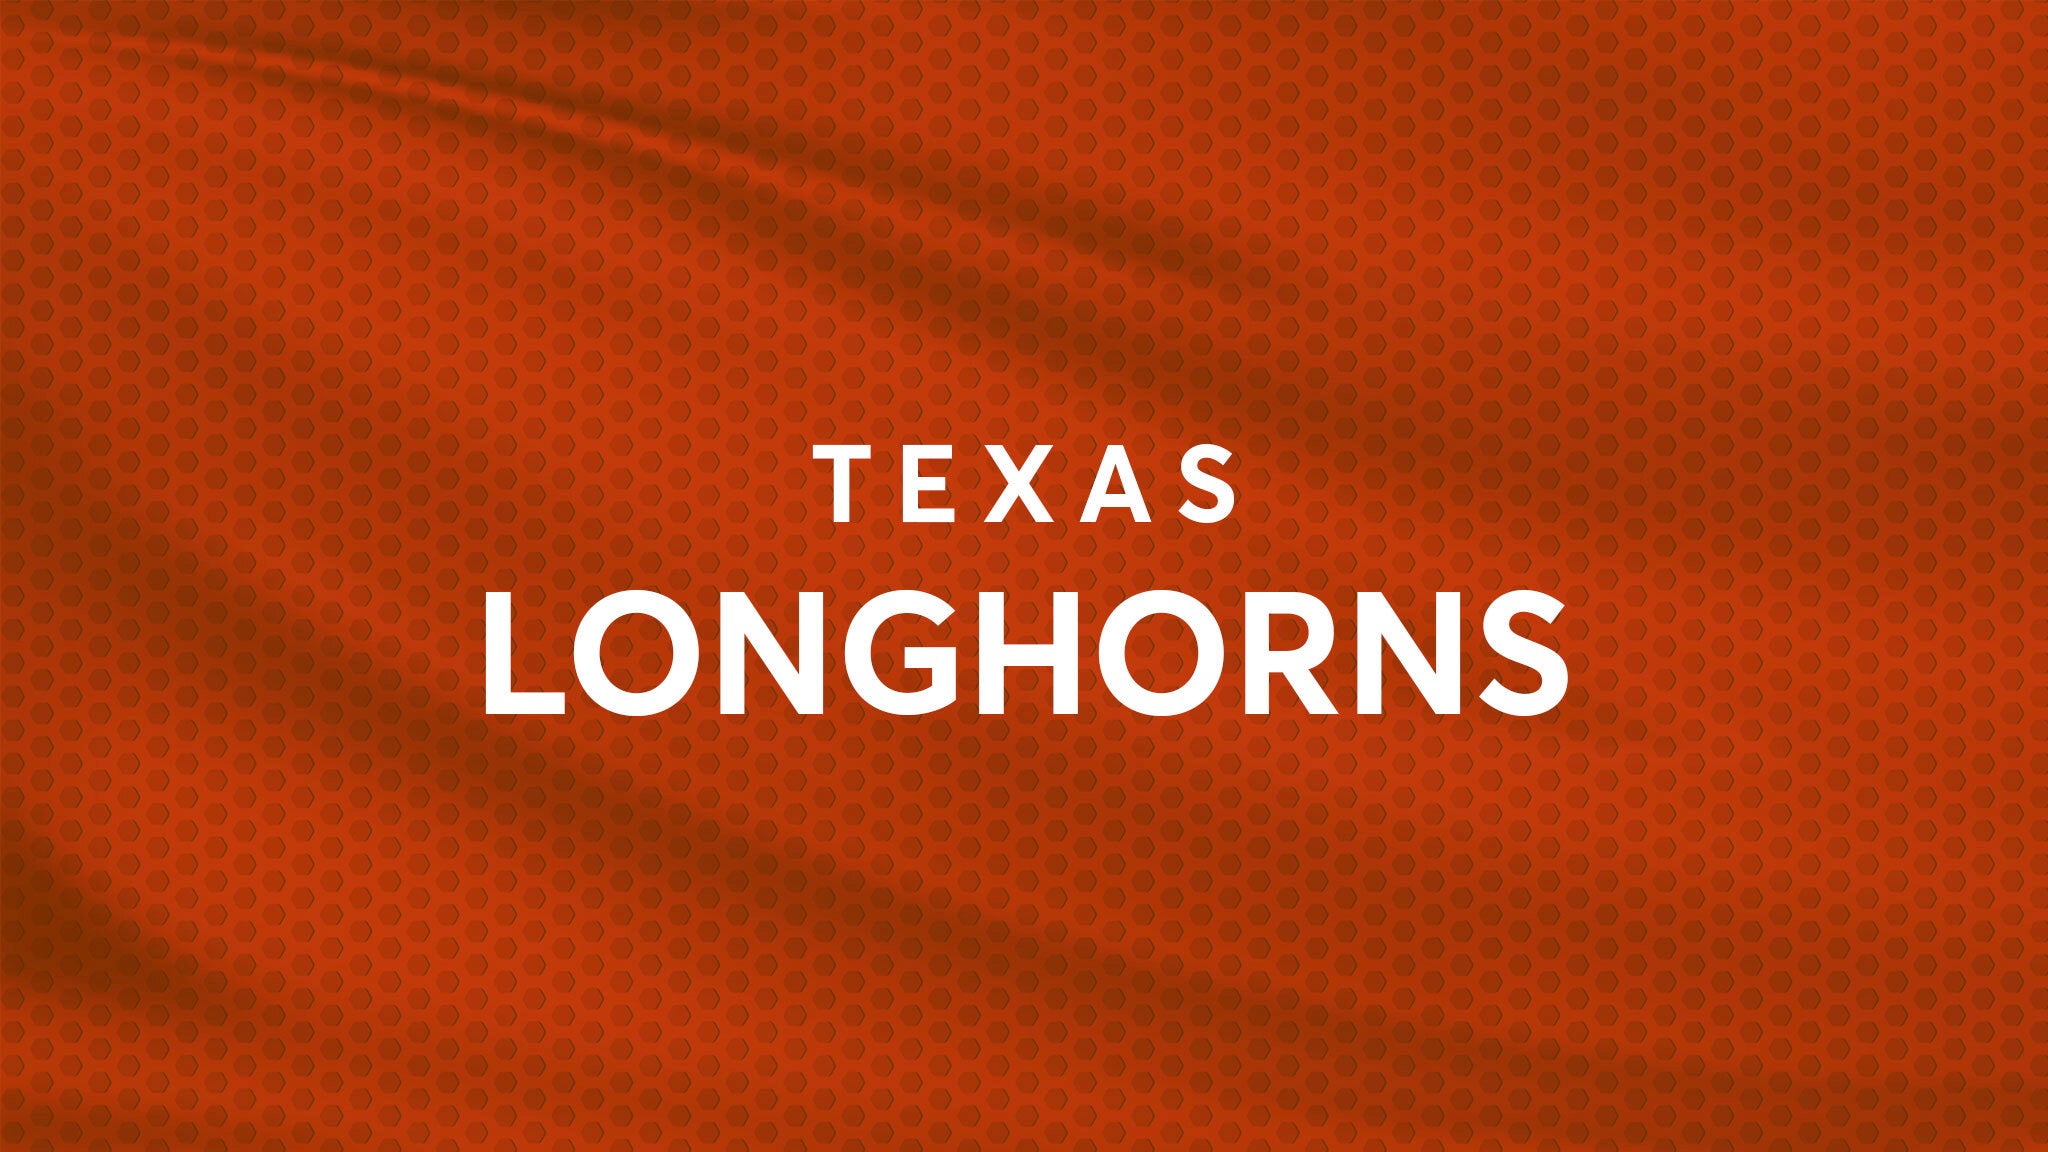 Texas Longhorns Baseball vs. Oklahoma State Cowboys Baseball